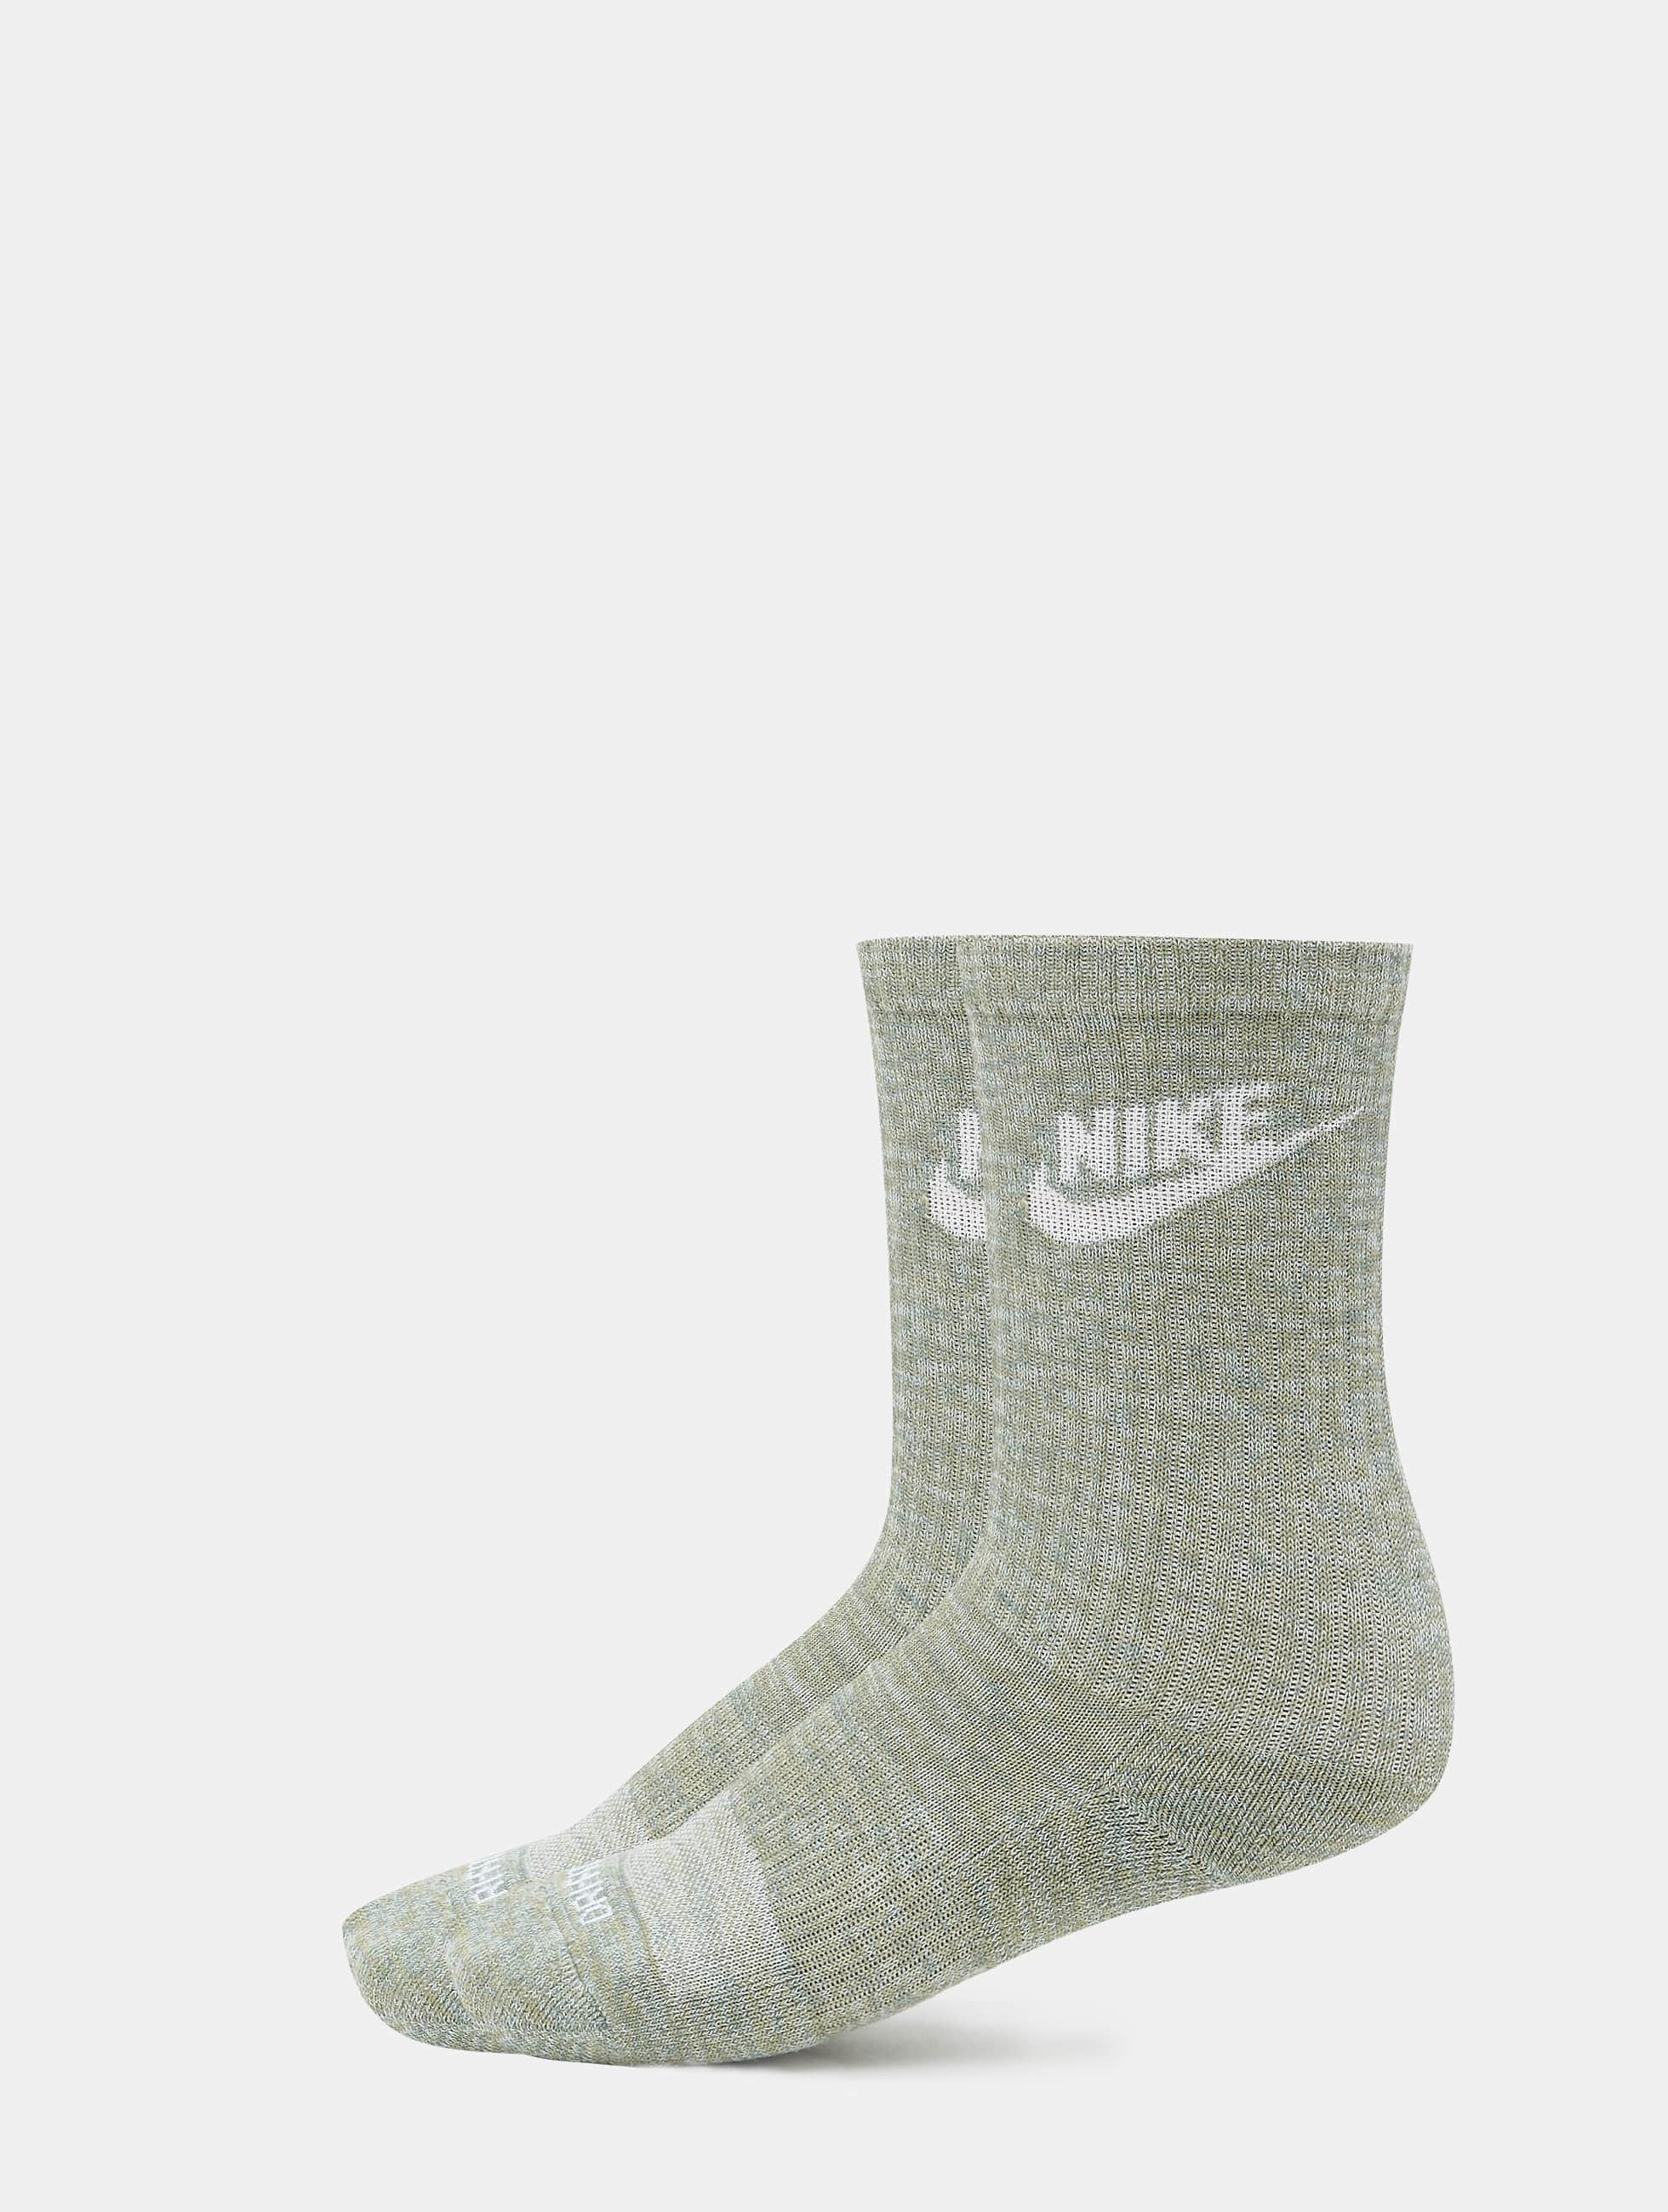 Nike Socken Everyday Plus Crew in olive 993160